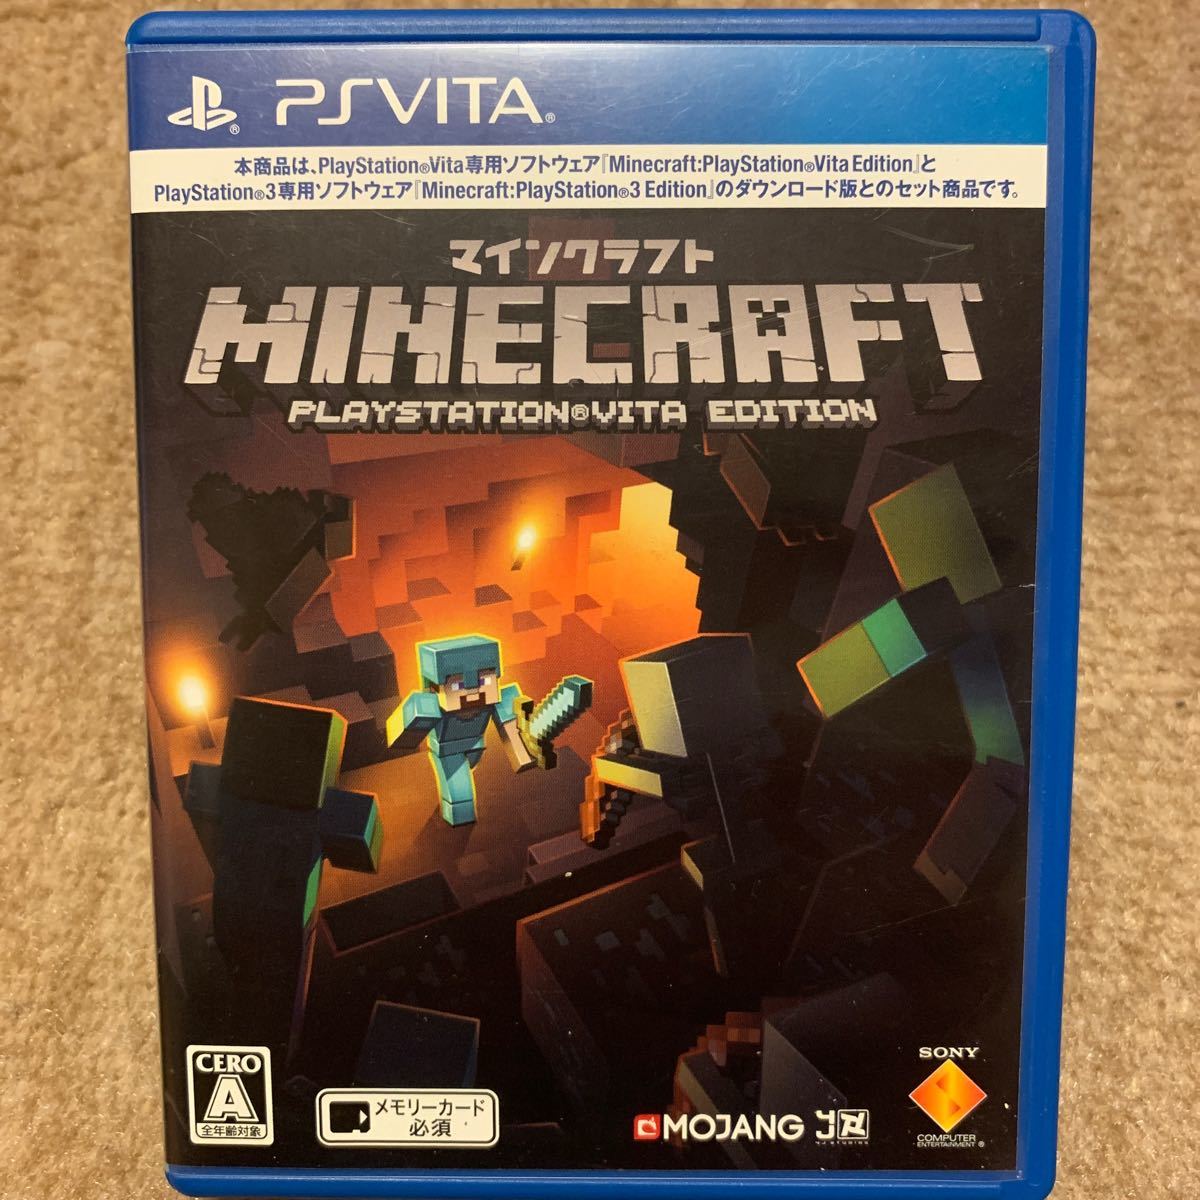 Paypayフリマ Psvita Minecraft Playstation Vita Edition